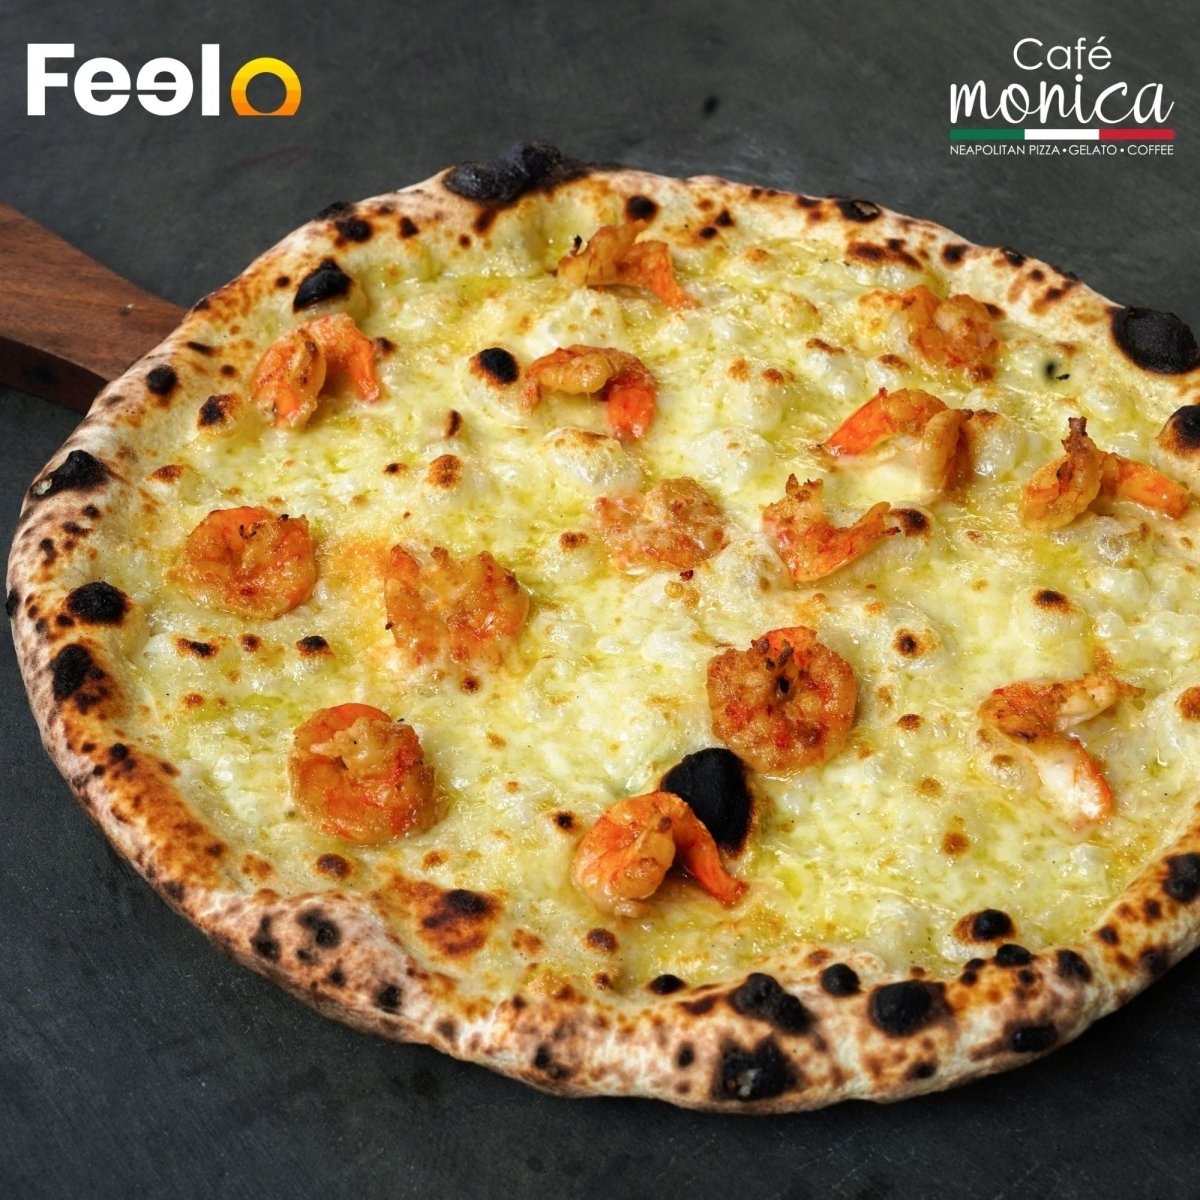 1x Peperoncino Prawns Regular 12-inch Pizza in Cafe Monica - Dutch Hospital - Cafe Monica Sri Lanka, Colombo 01 | Feelo